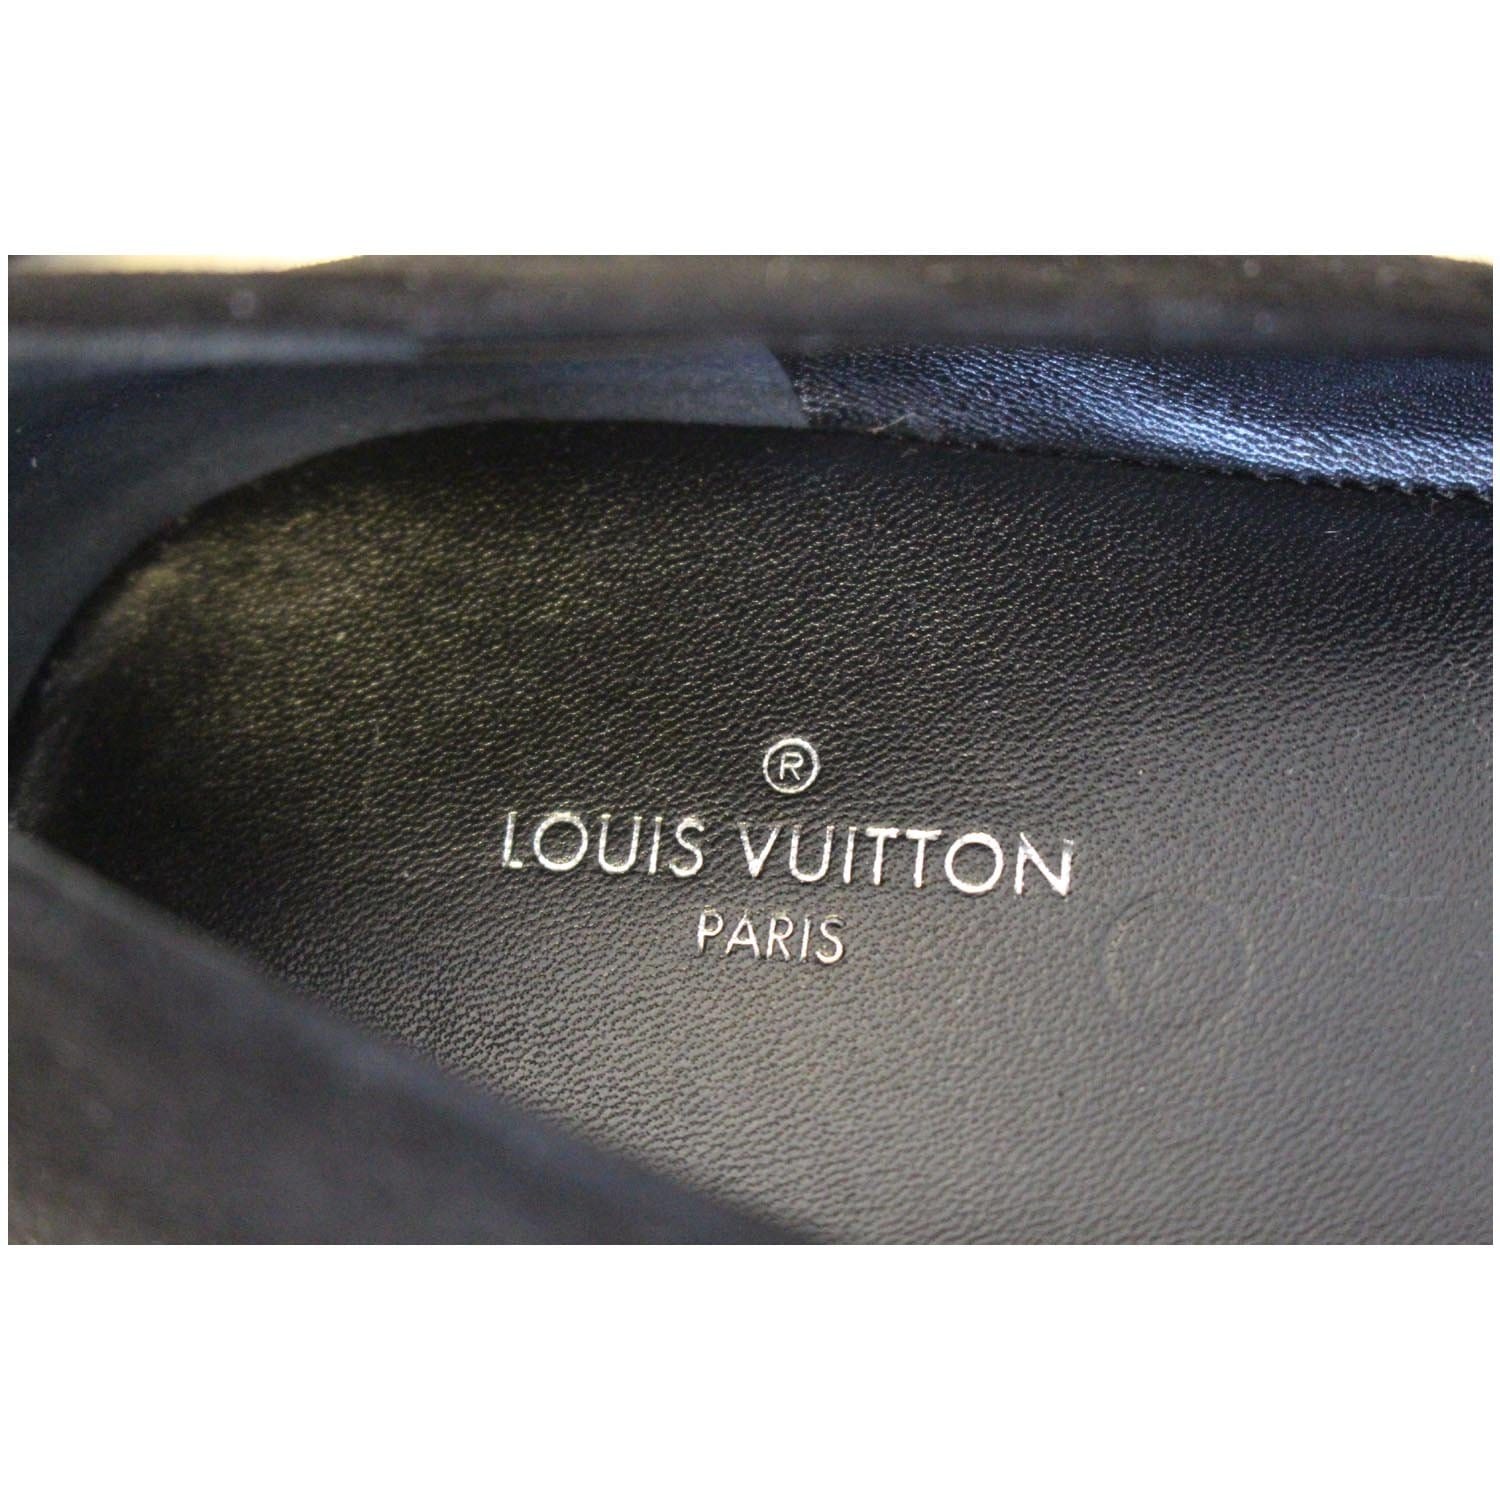 Sharon by Dariz - Pantuflas de marca Louis Vuitton $360